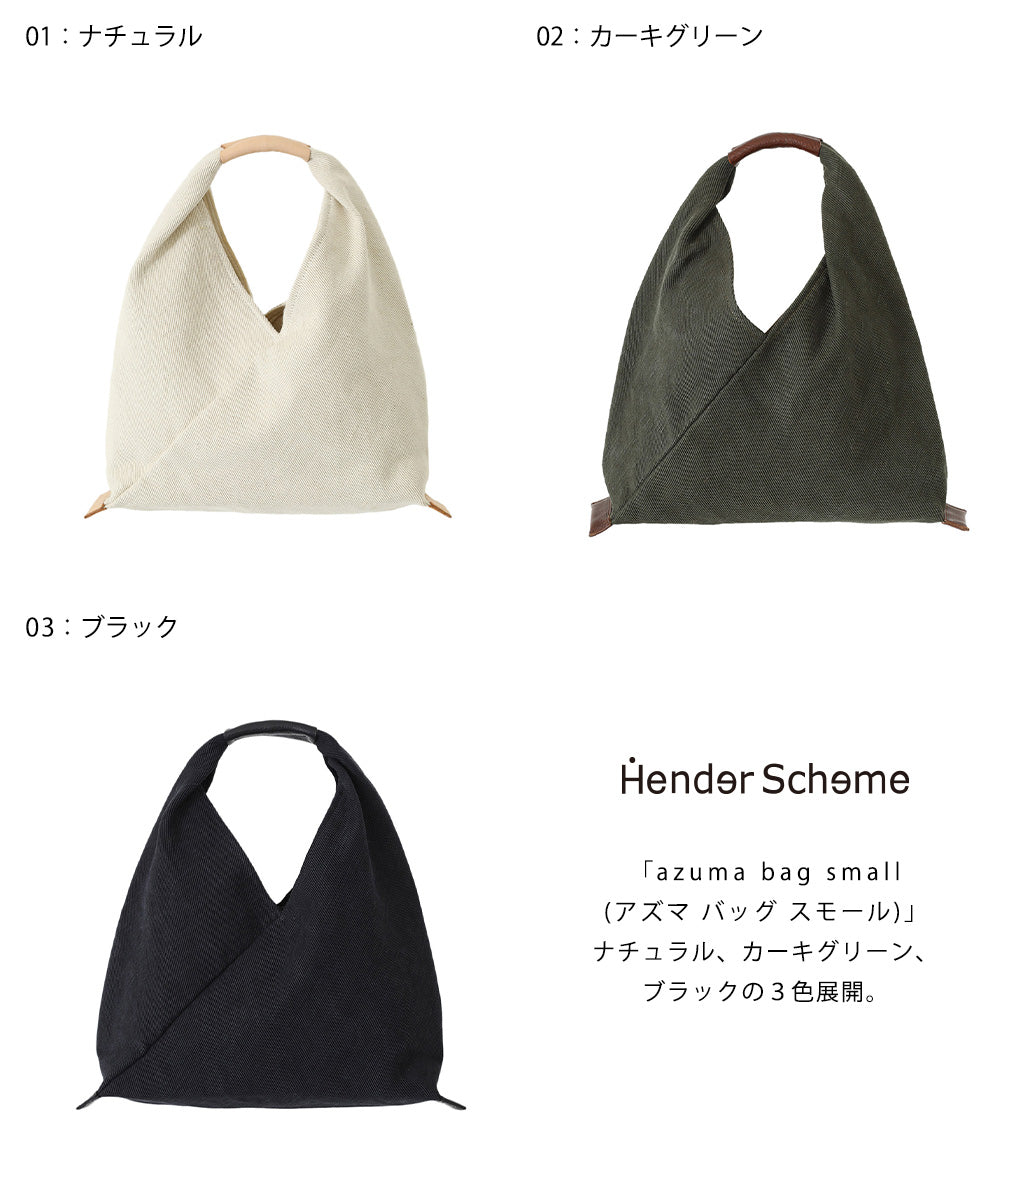 Hender Scheme azuma bag small – unexpected store